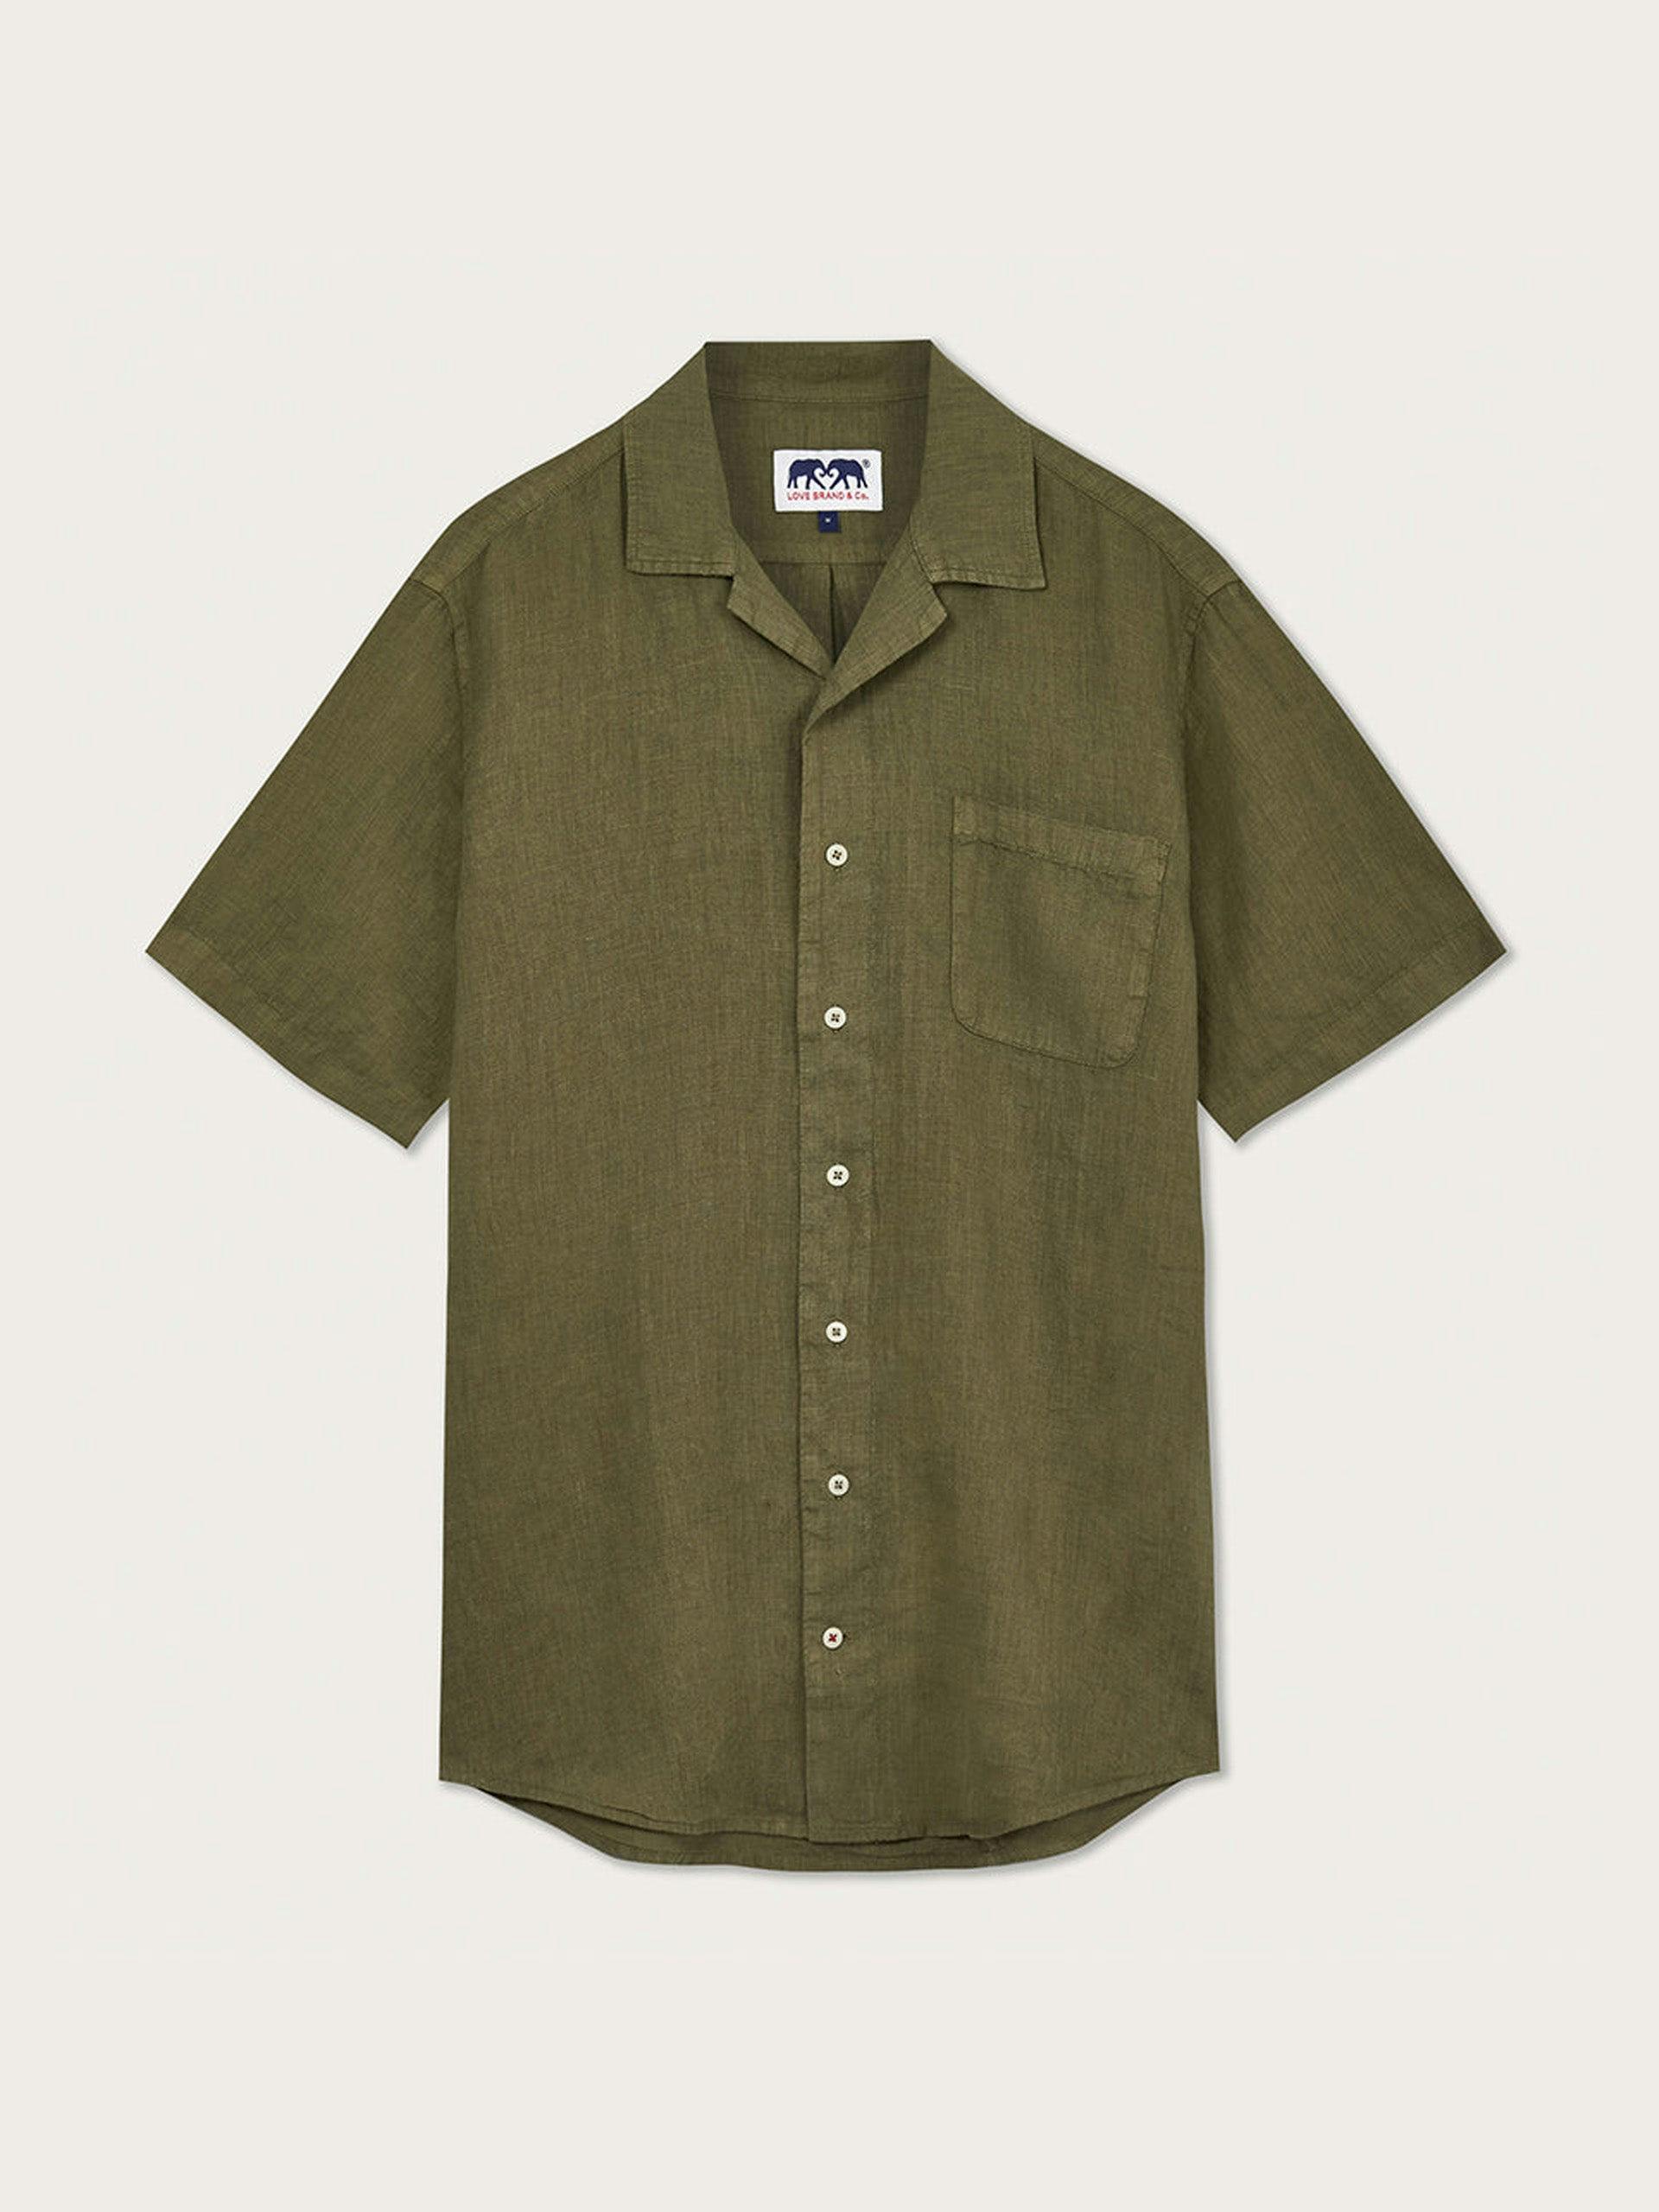 Olive linen shirt